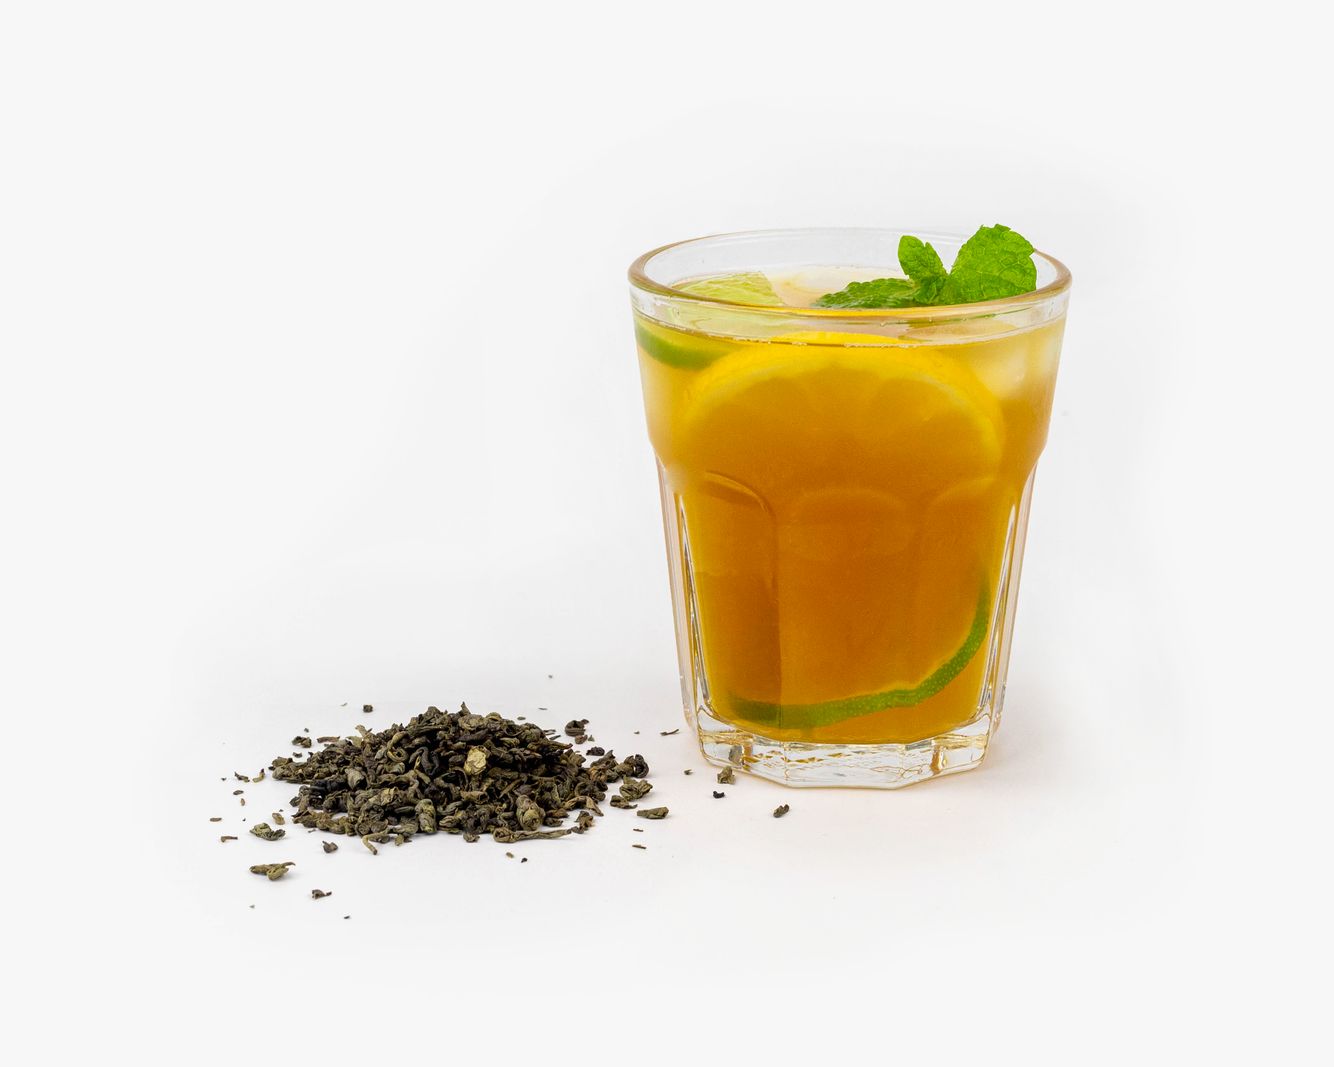 Vilgain Gunpowder zelený čaj BIO